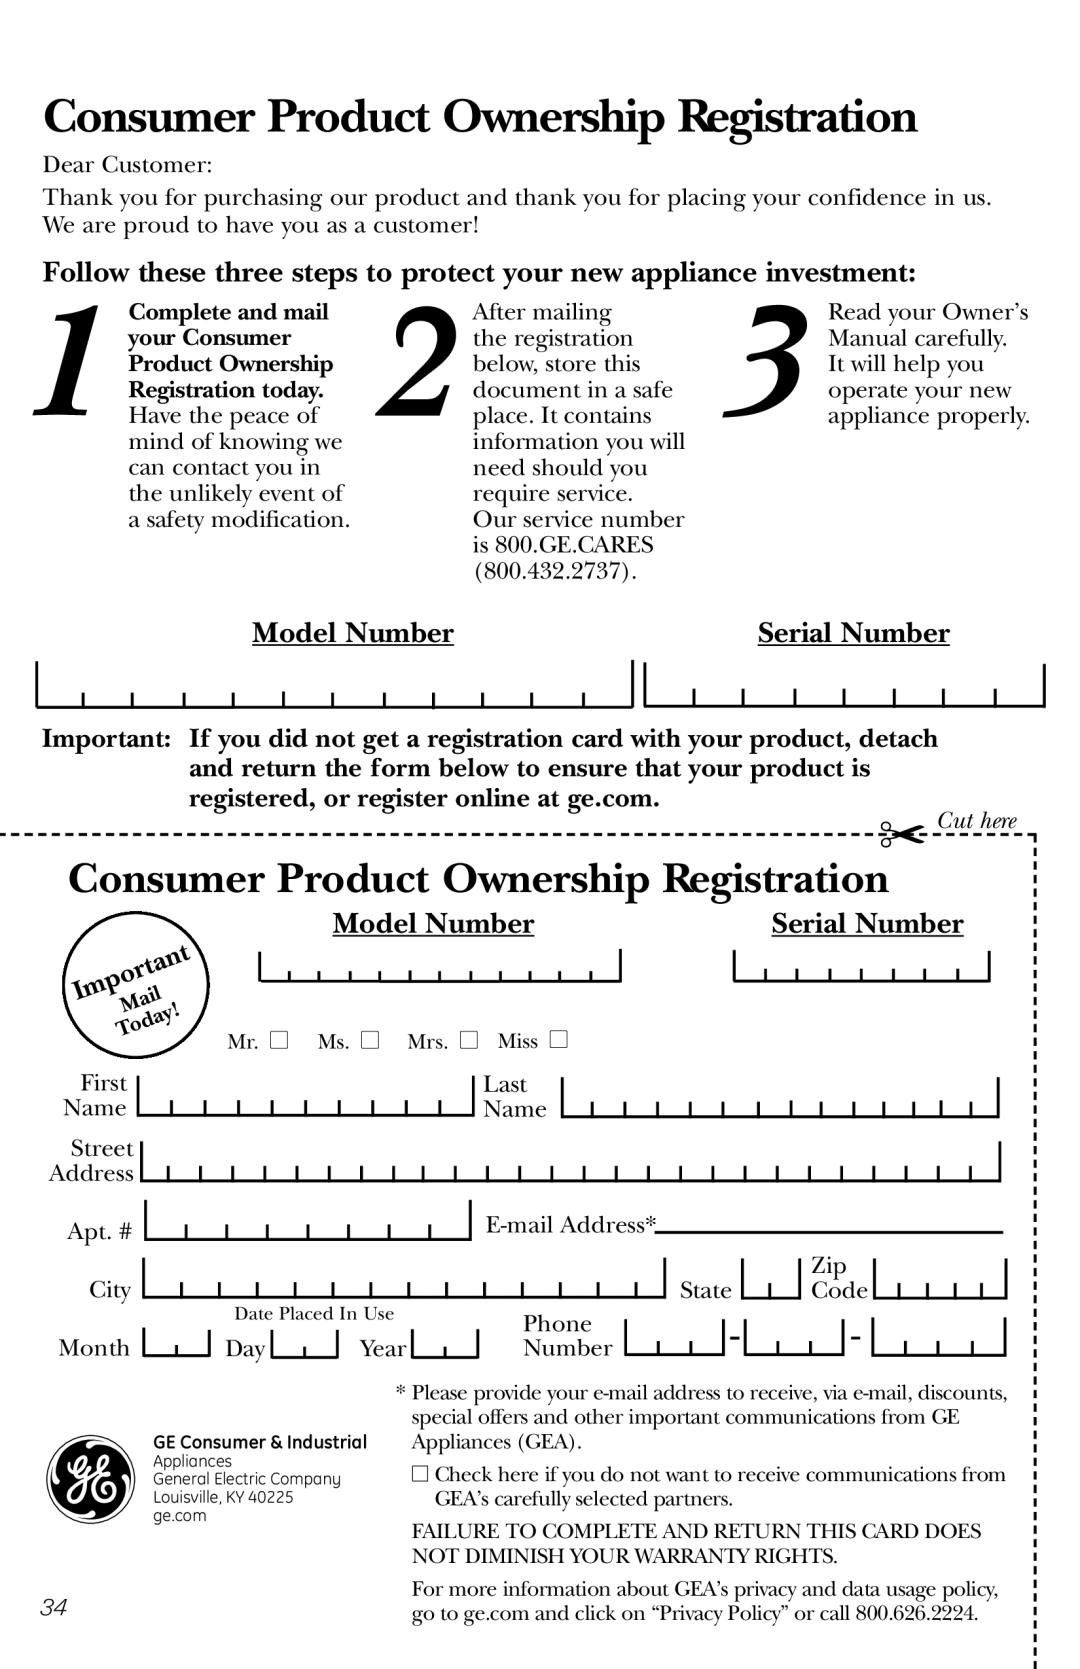 GE PEM31 owner manual Consumer Product Ownership Registration, Serial Number, Model Number, Cut here 